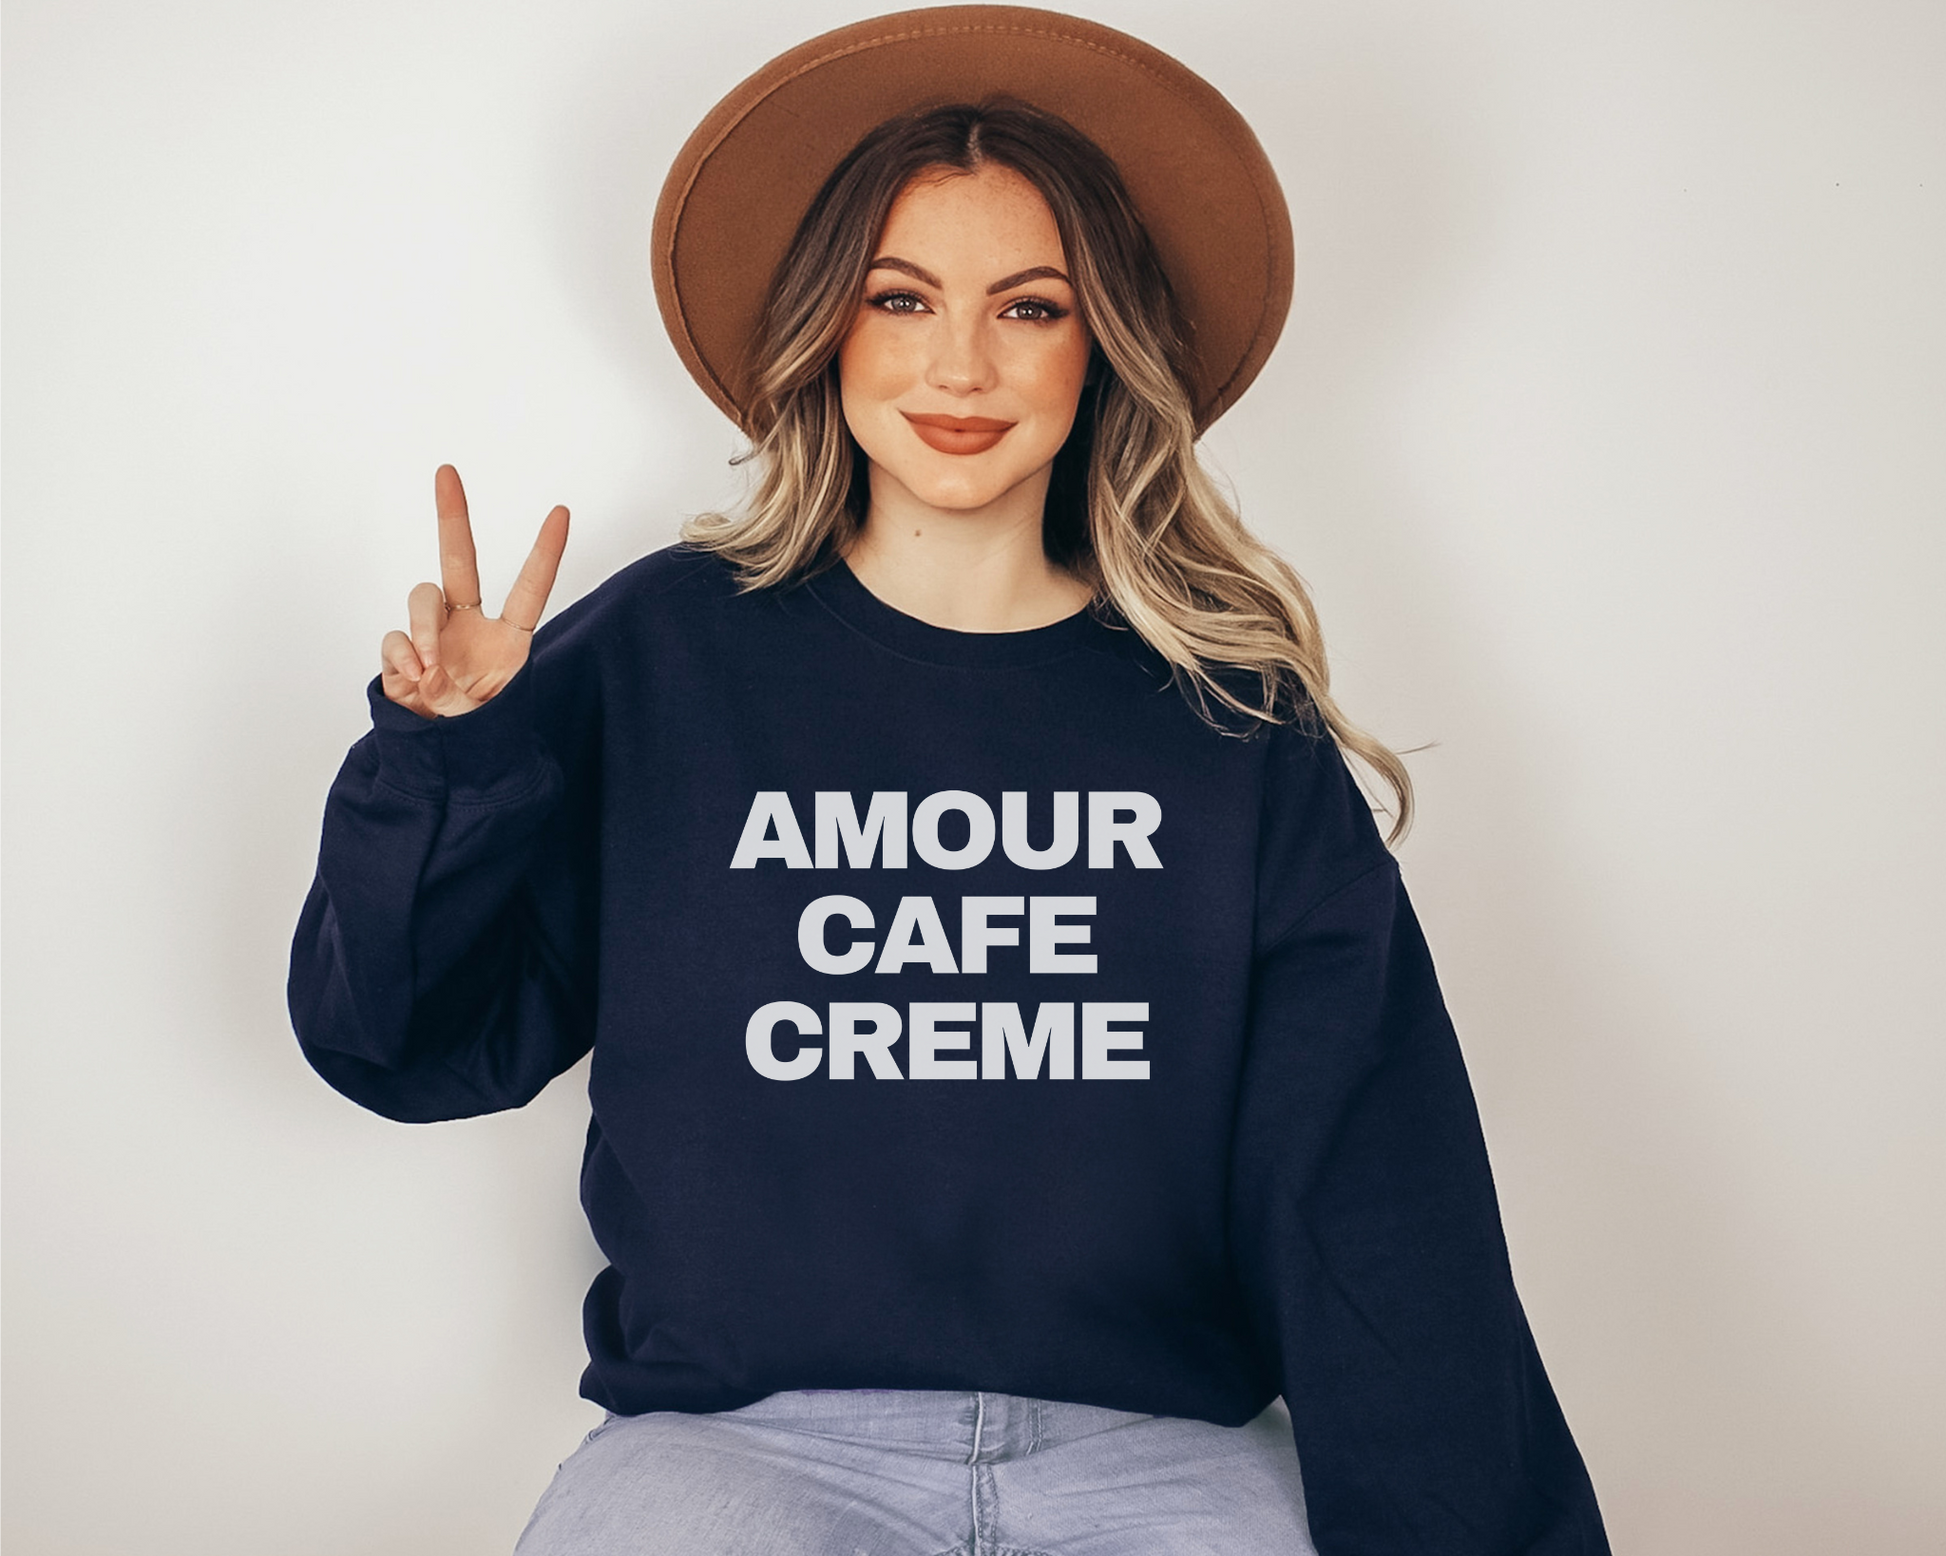 Amour Cafe Creme Sweatshirt in Navy